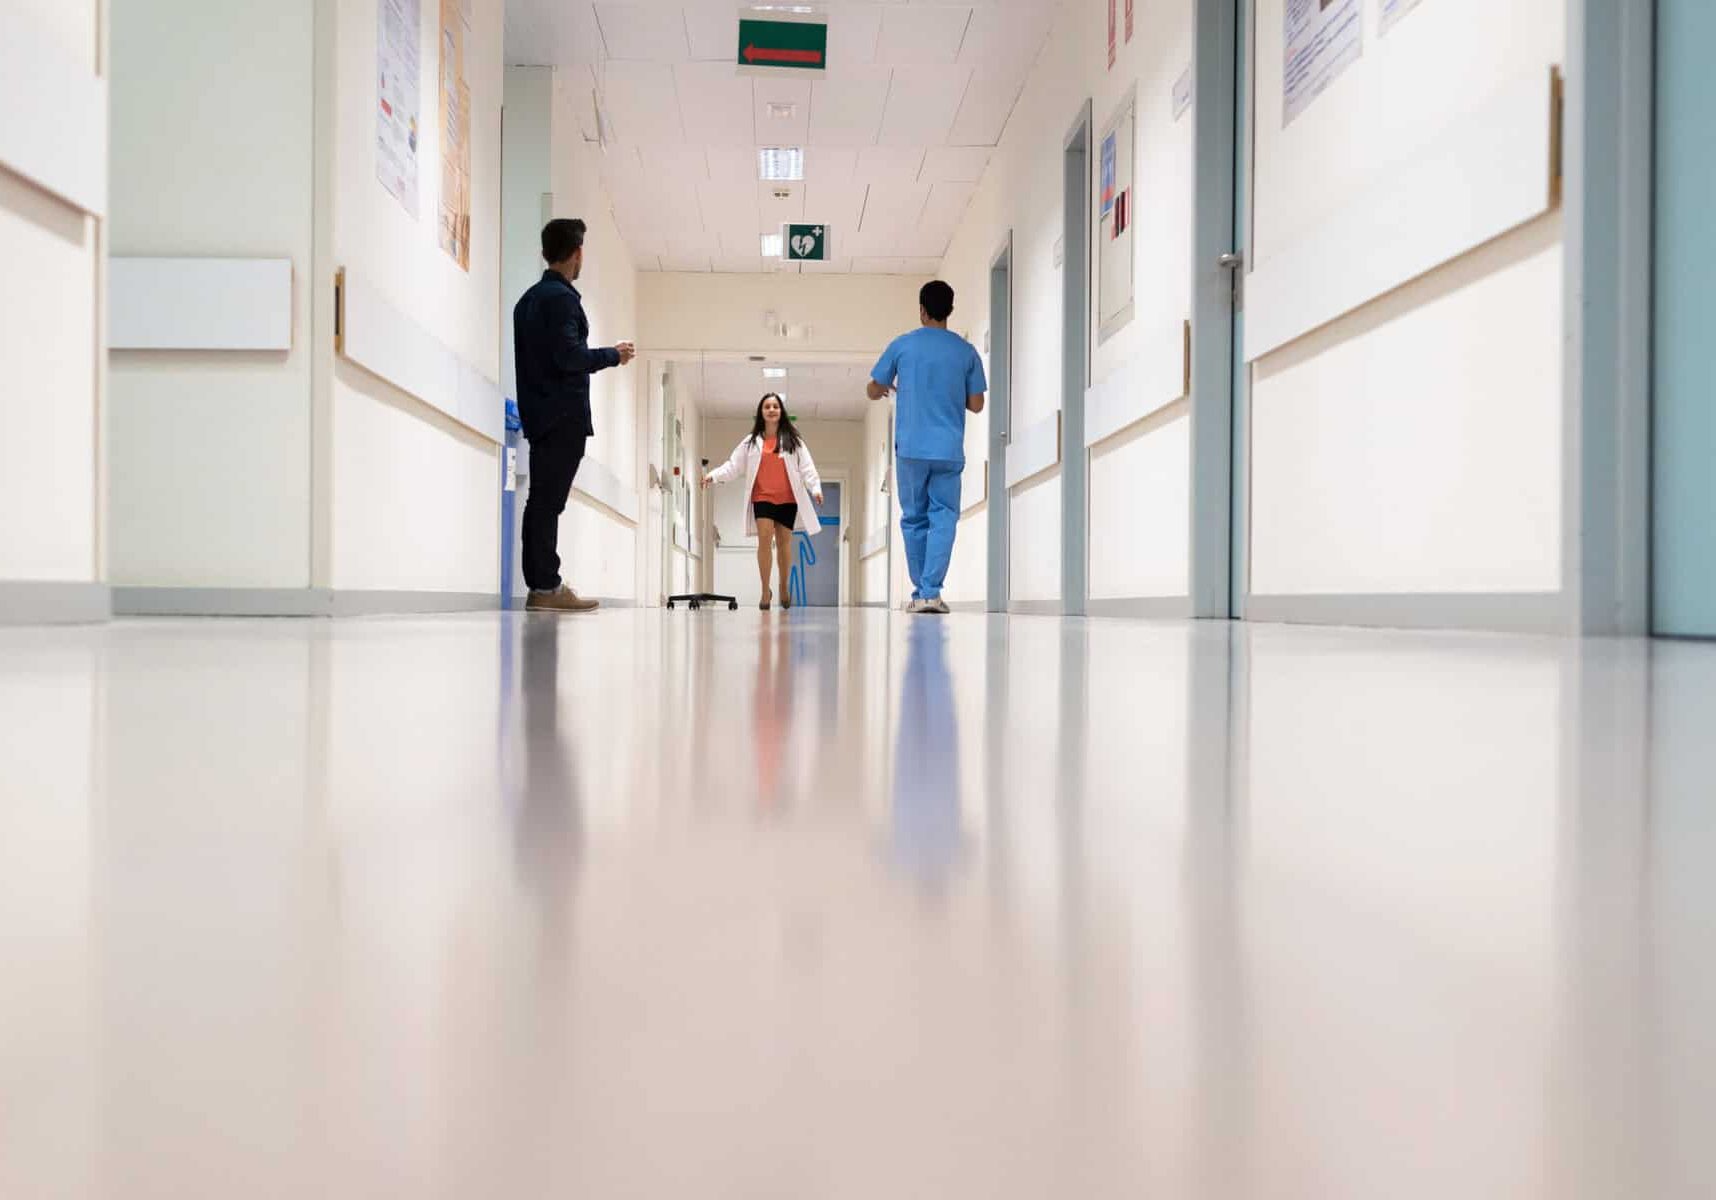 Female medic running in hall of hospital beneath people.